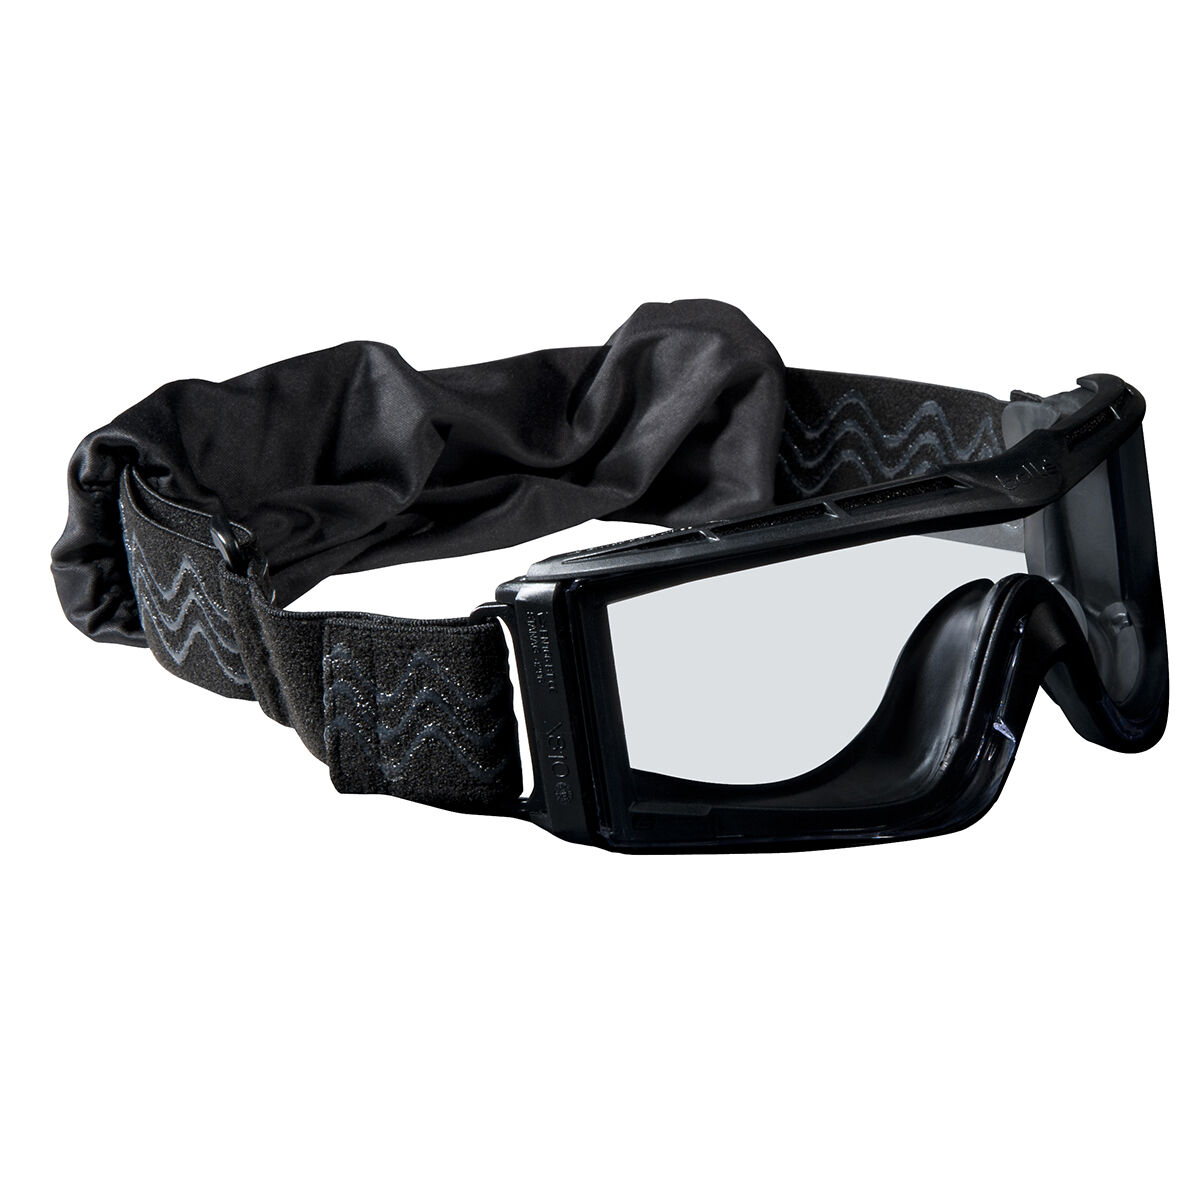 Bollé Safety | The PPE eyewear specialists